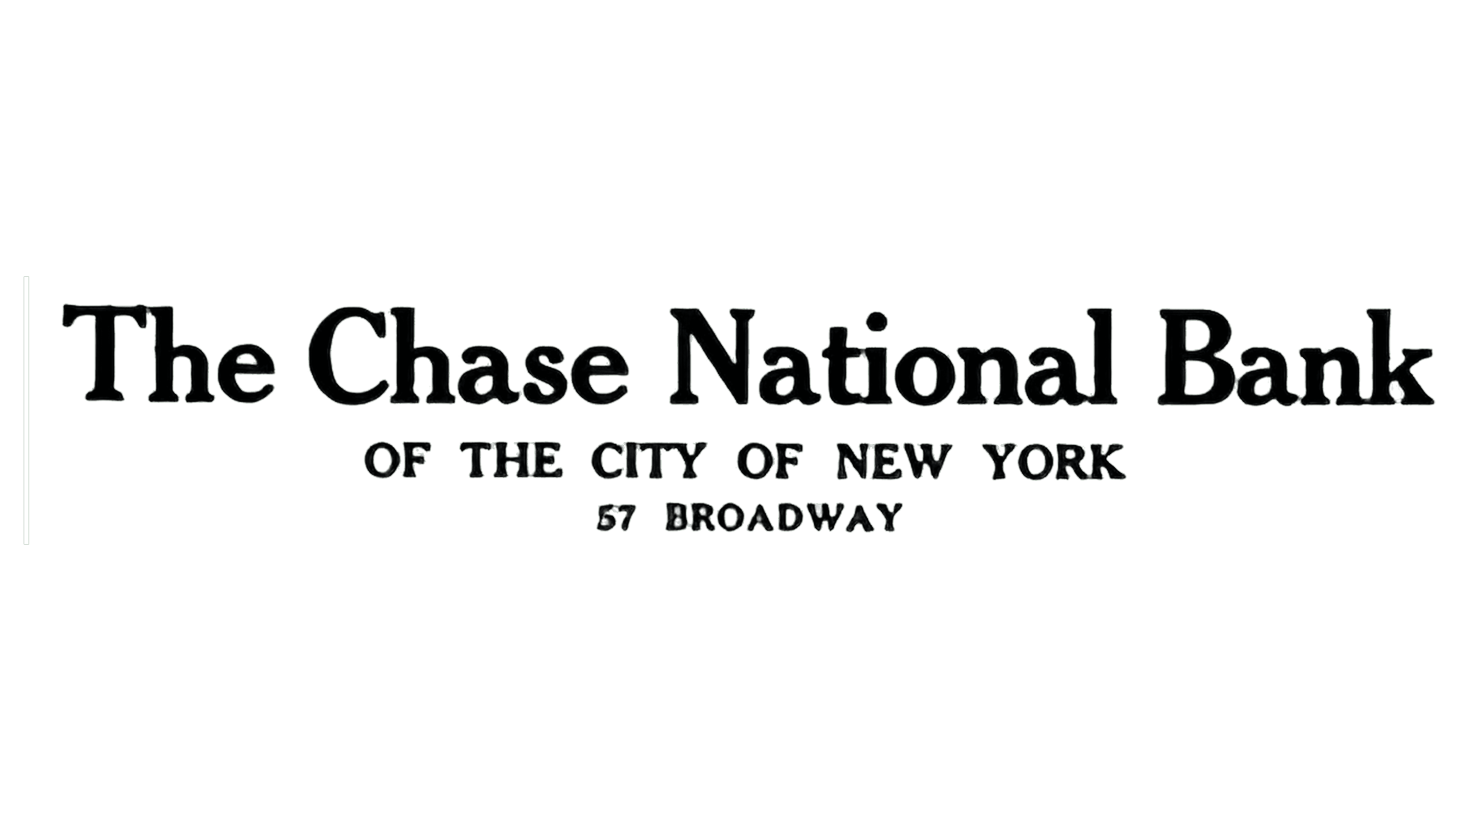 Chase national bank sign 1877 1955